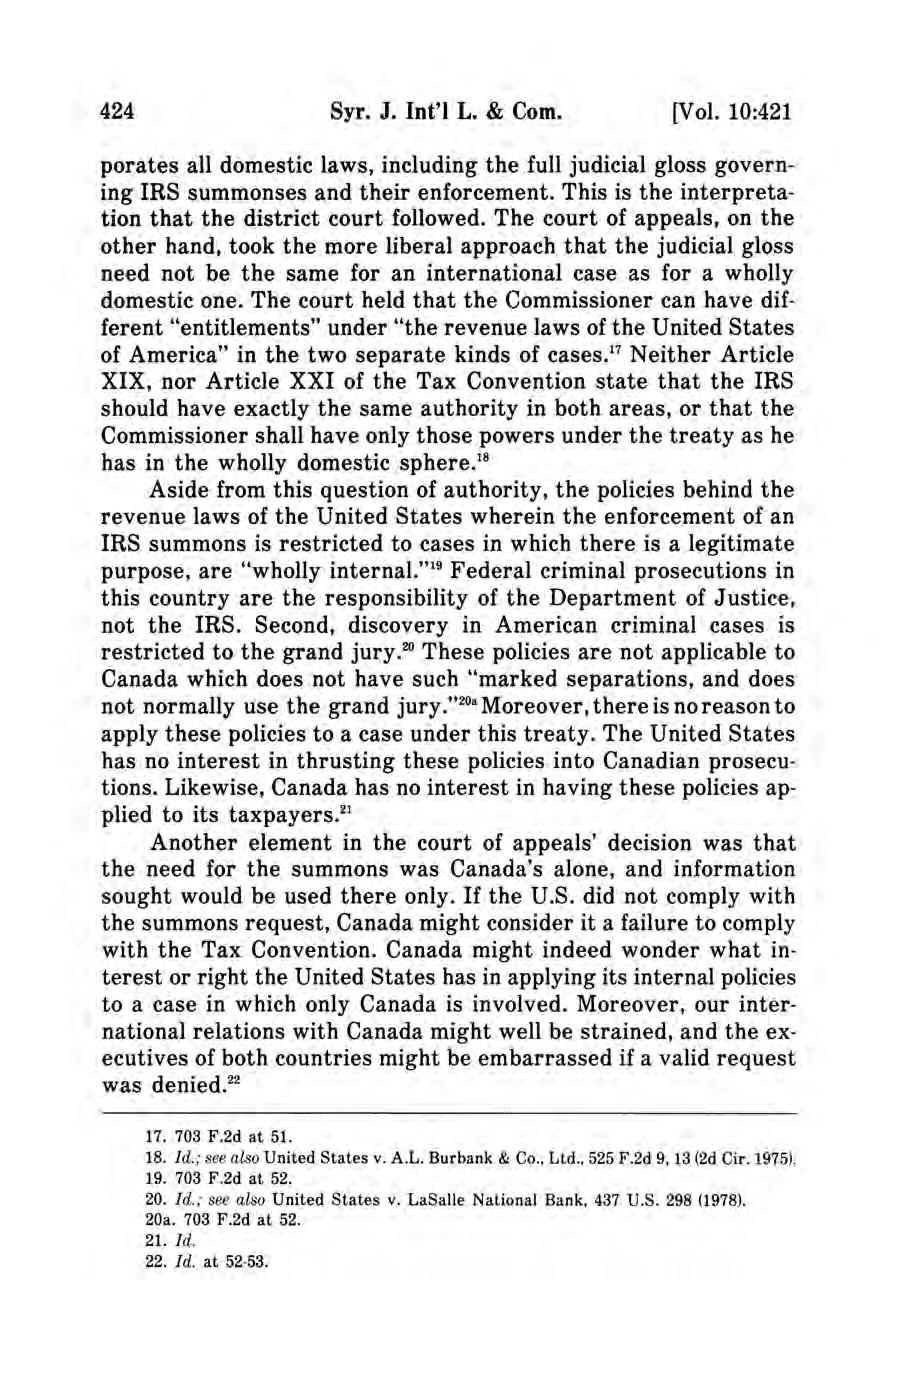 Syracuse Journal of International Law and Commerce, Vol. 10, No. 2 [1983], Art. 9 424 Syr. J. lnt'l L. & Com. [Vol.